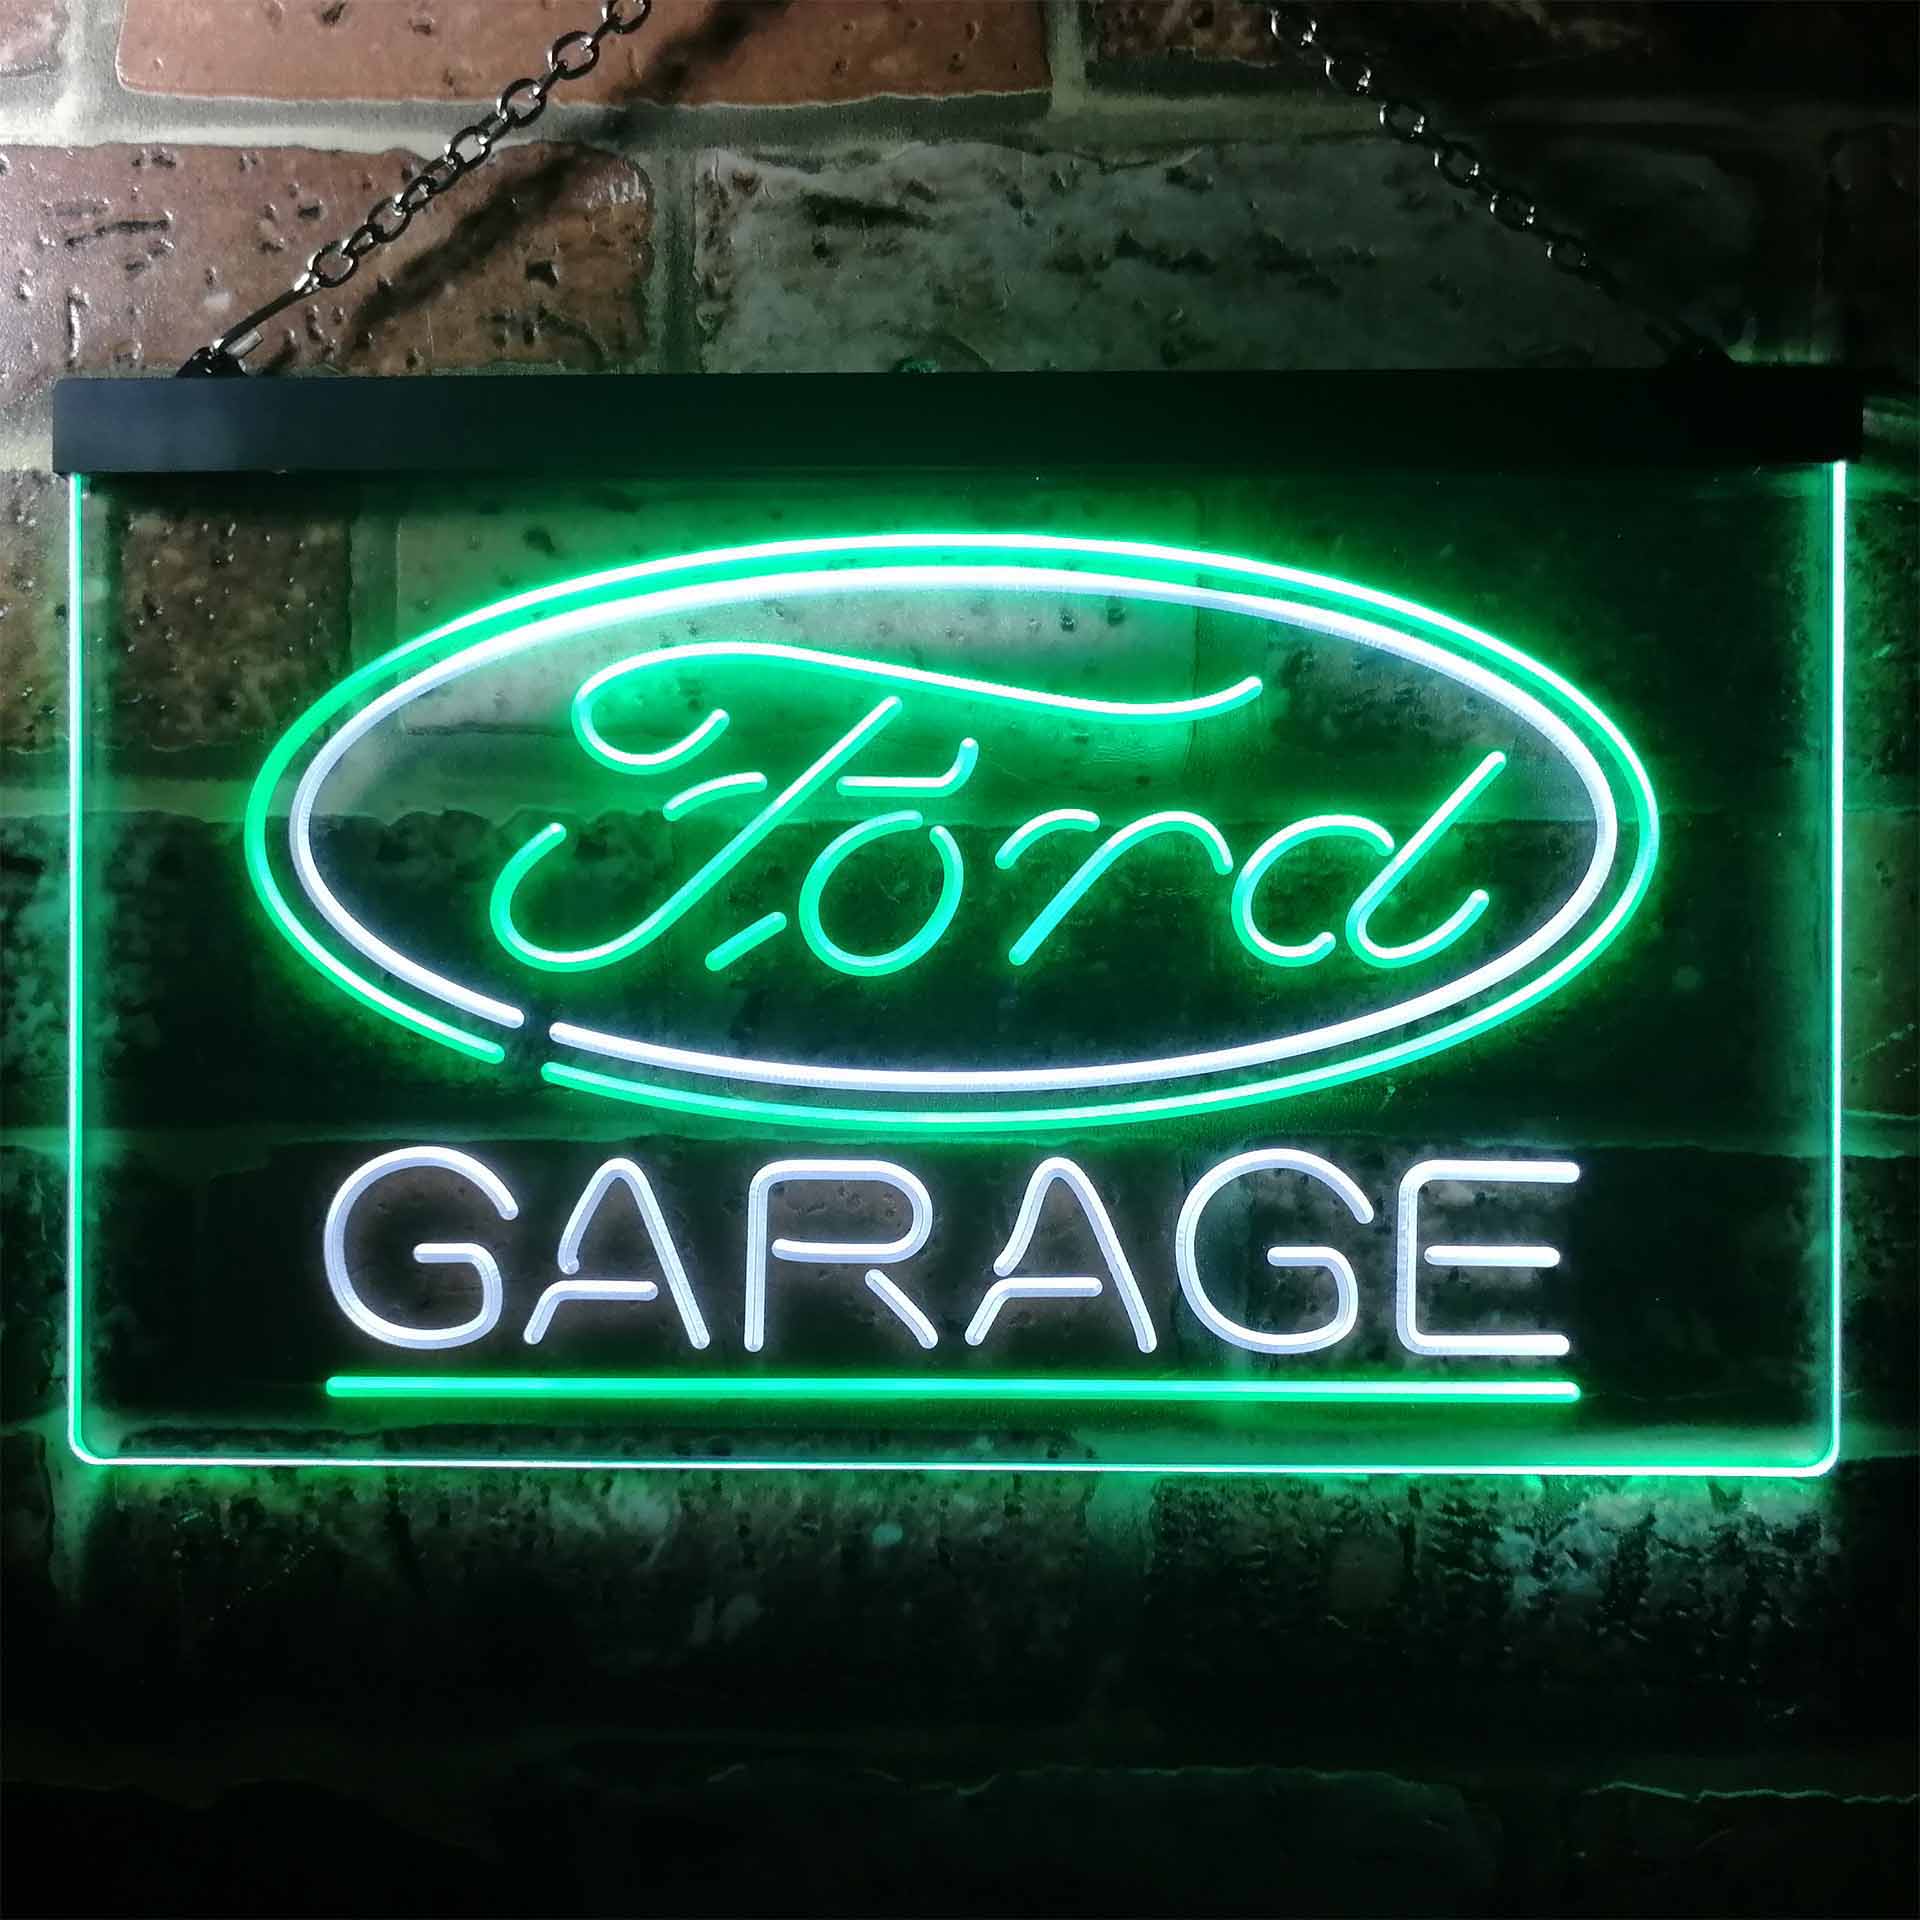 Ford Garage Neon LED Sign